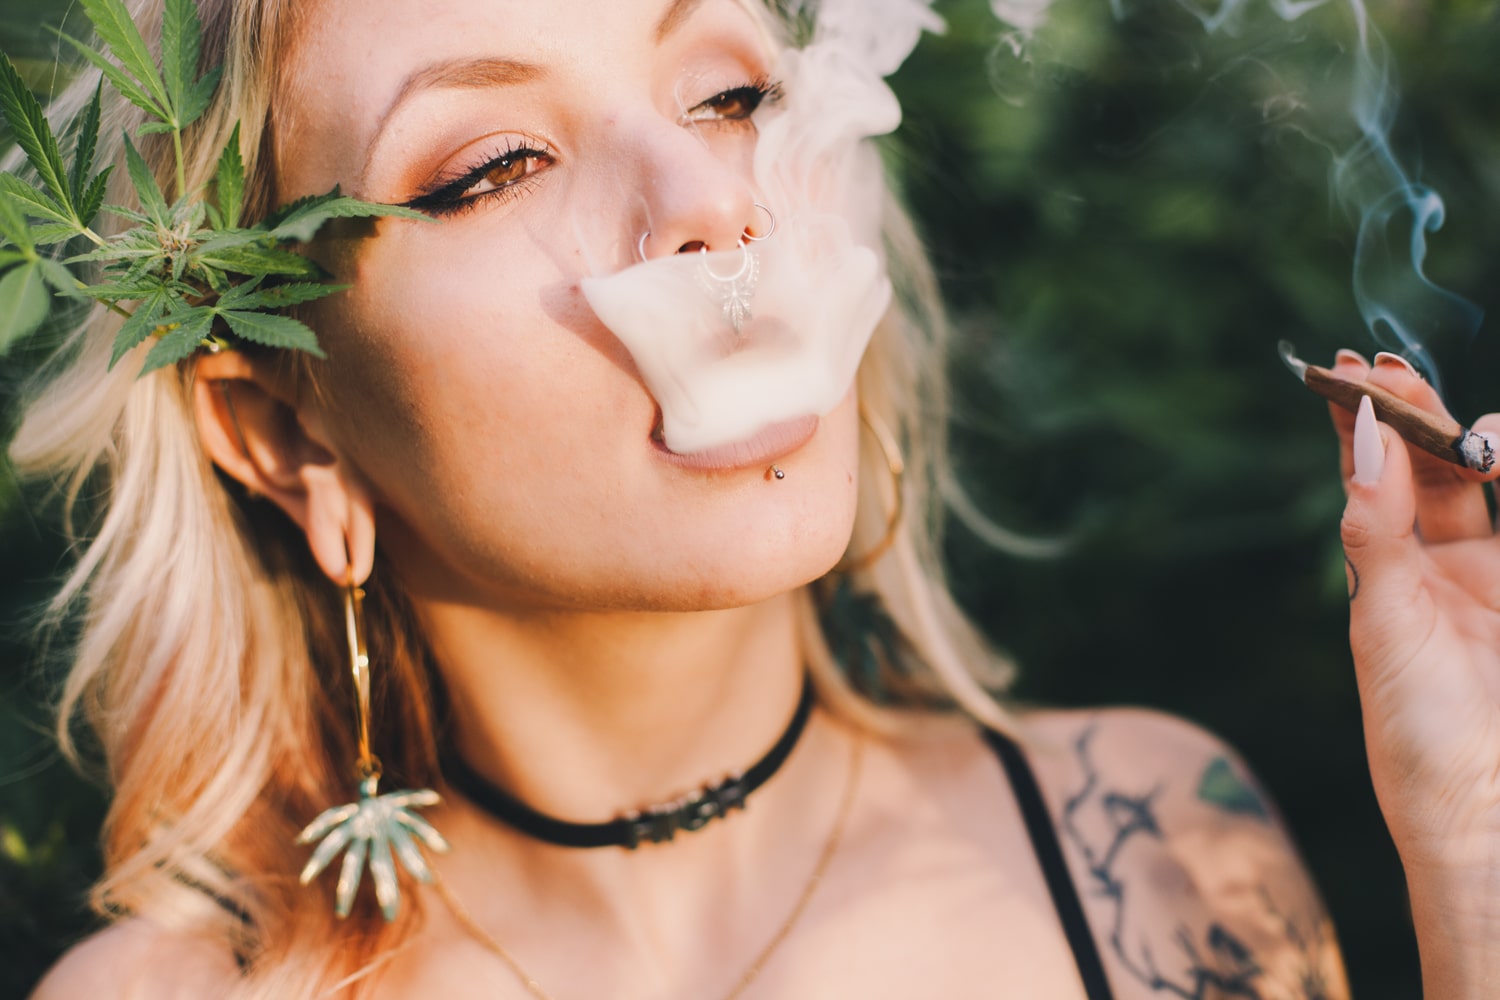 Attractive woman enjoying cannabis joint